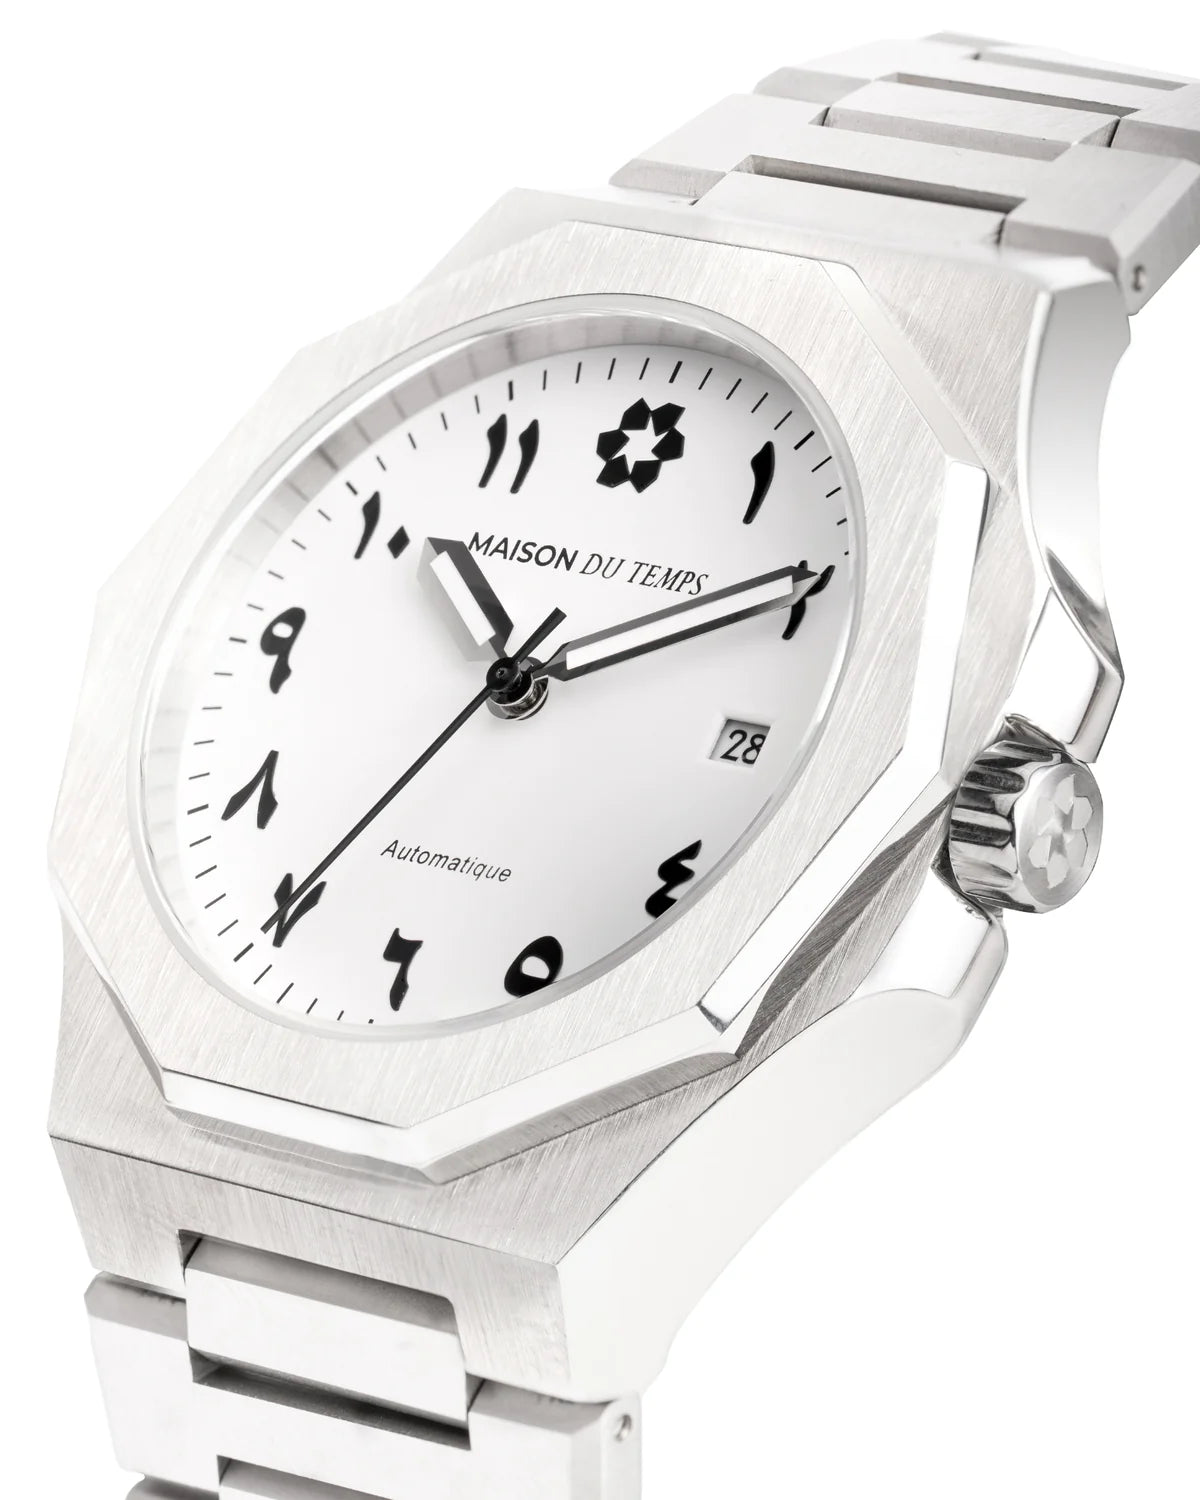 Arabic Dial watch white dial